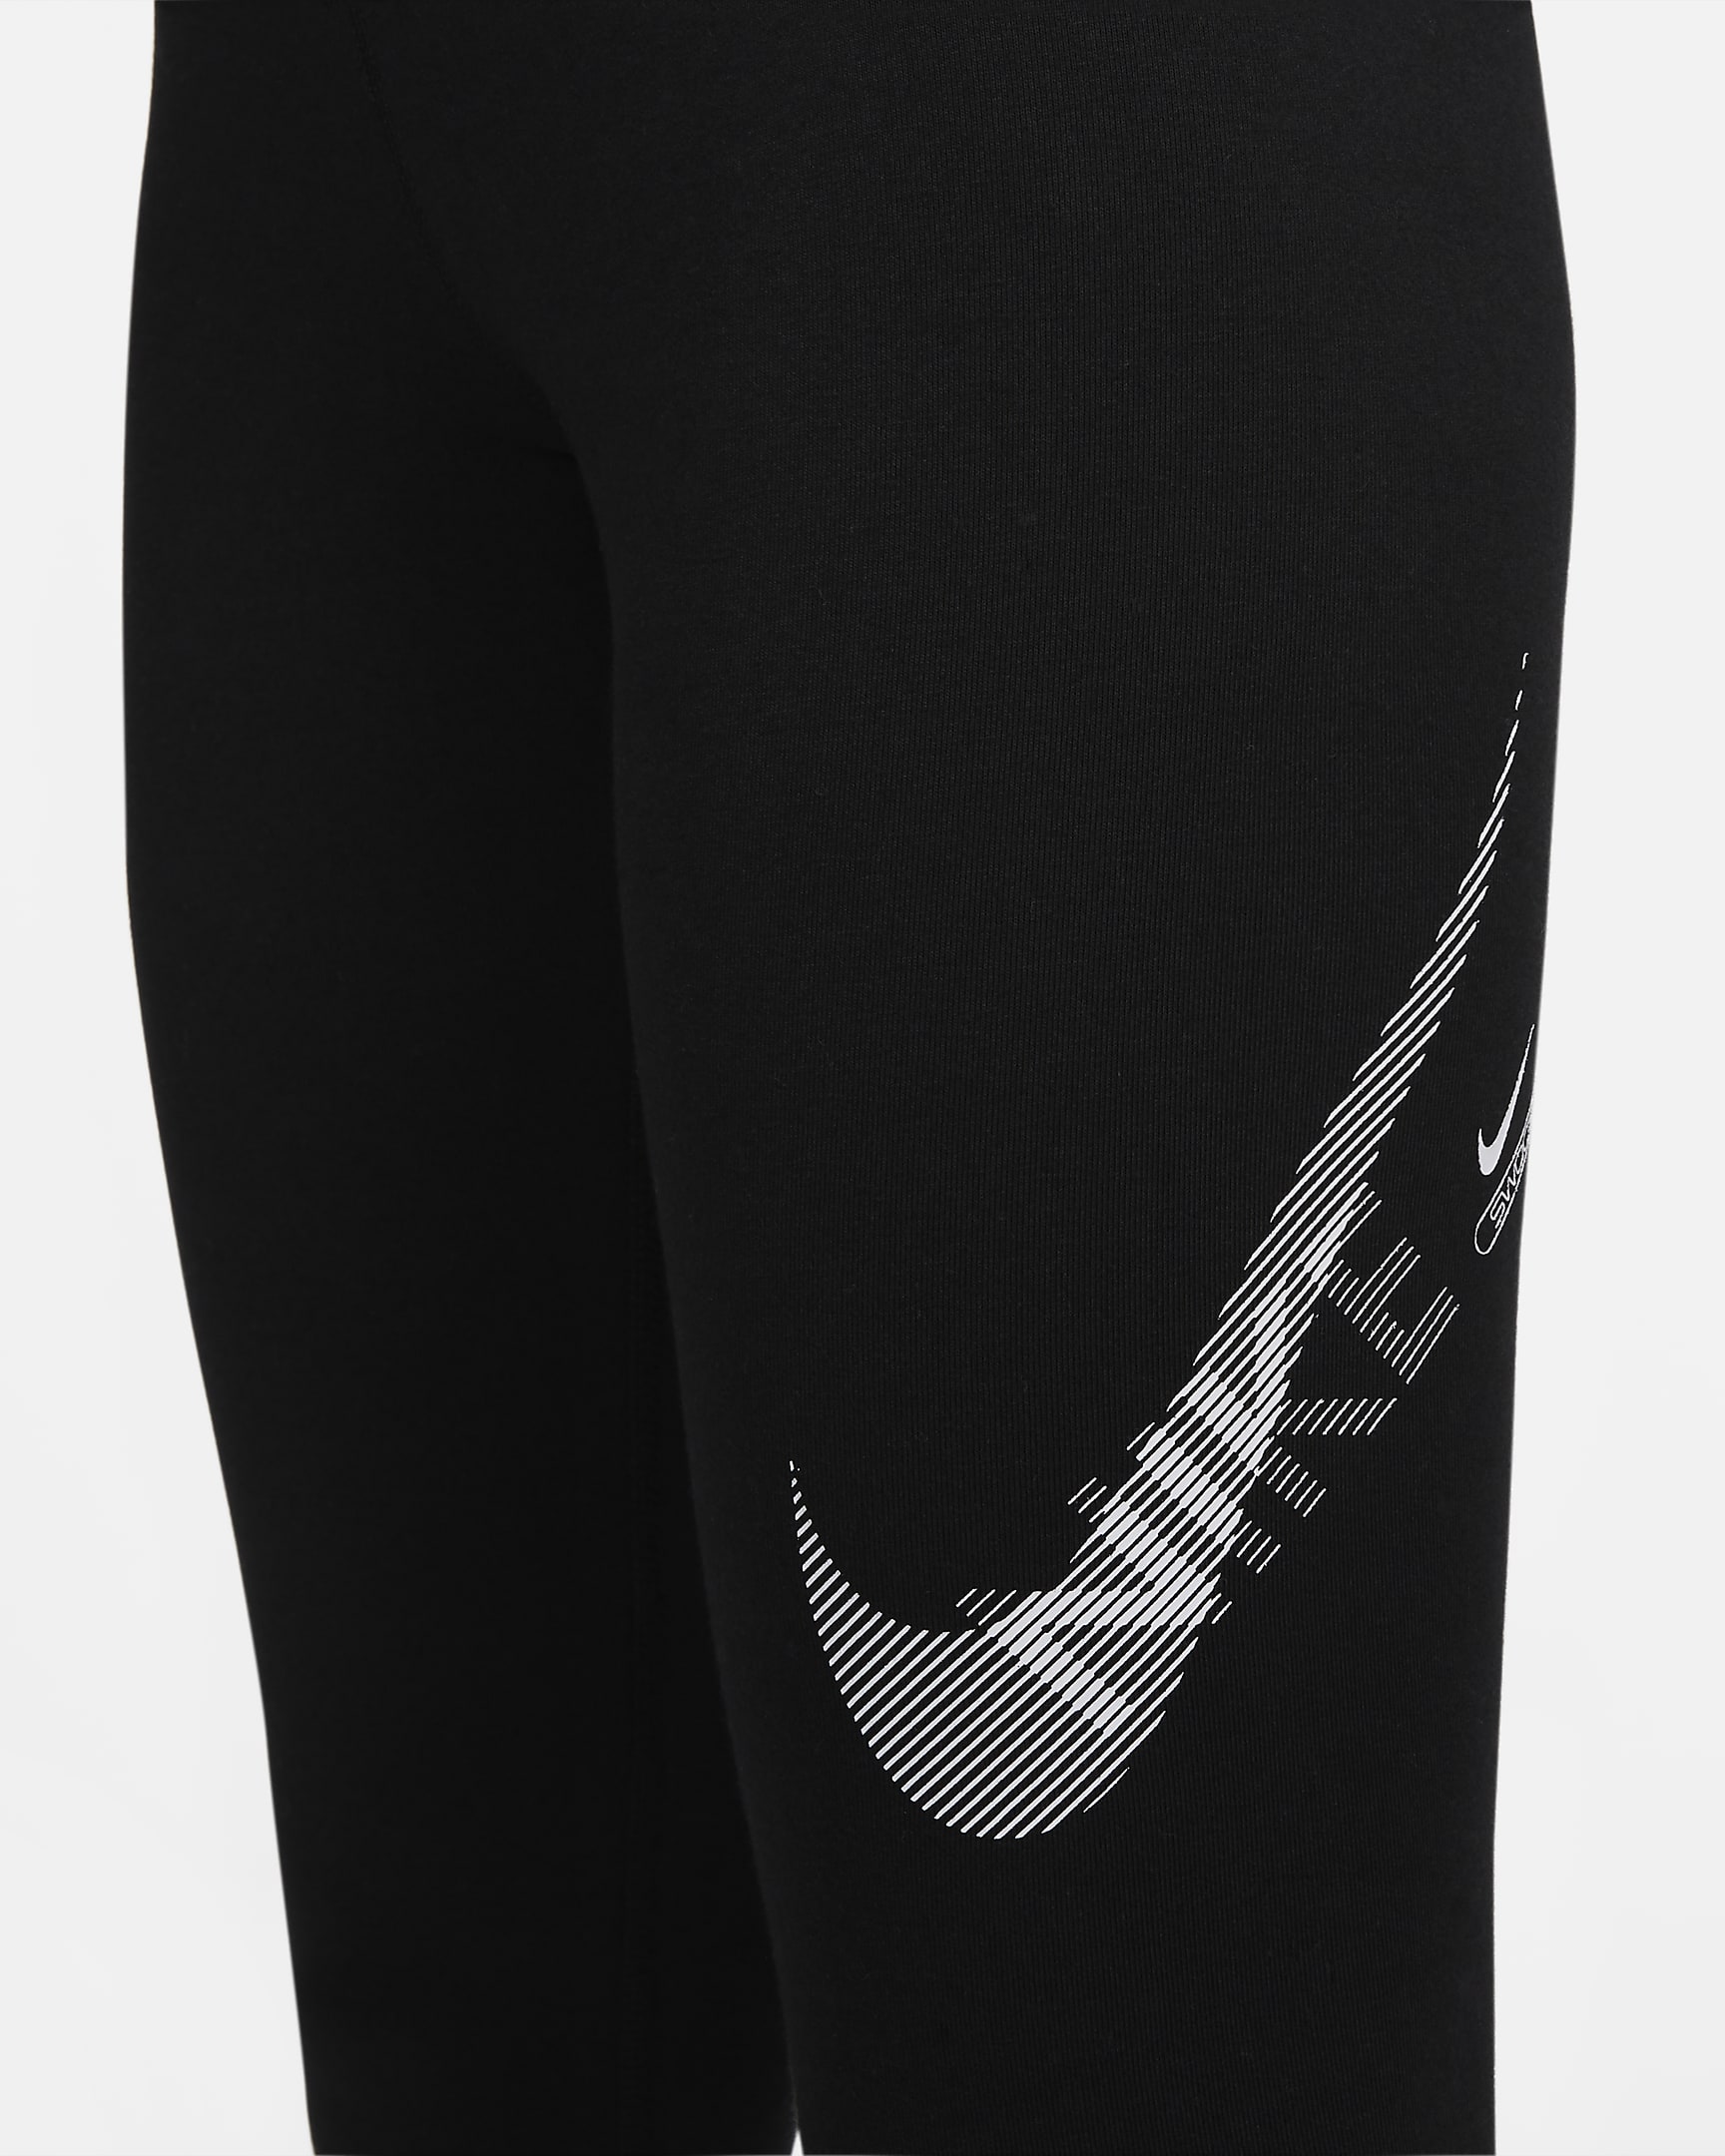 Nike Sportswear Swoosh-leggings med høj talje til kvinder - sort/hvid